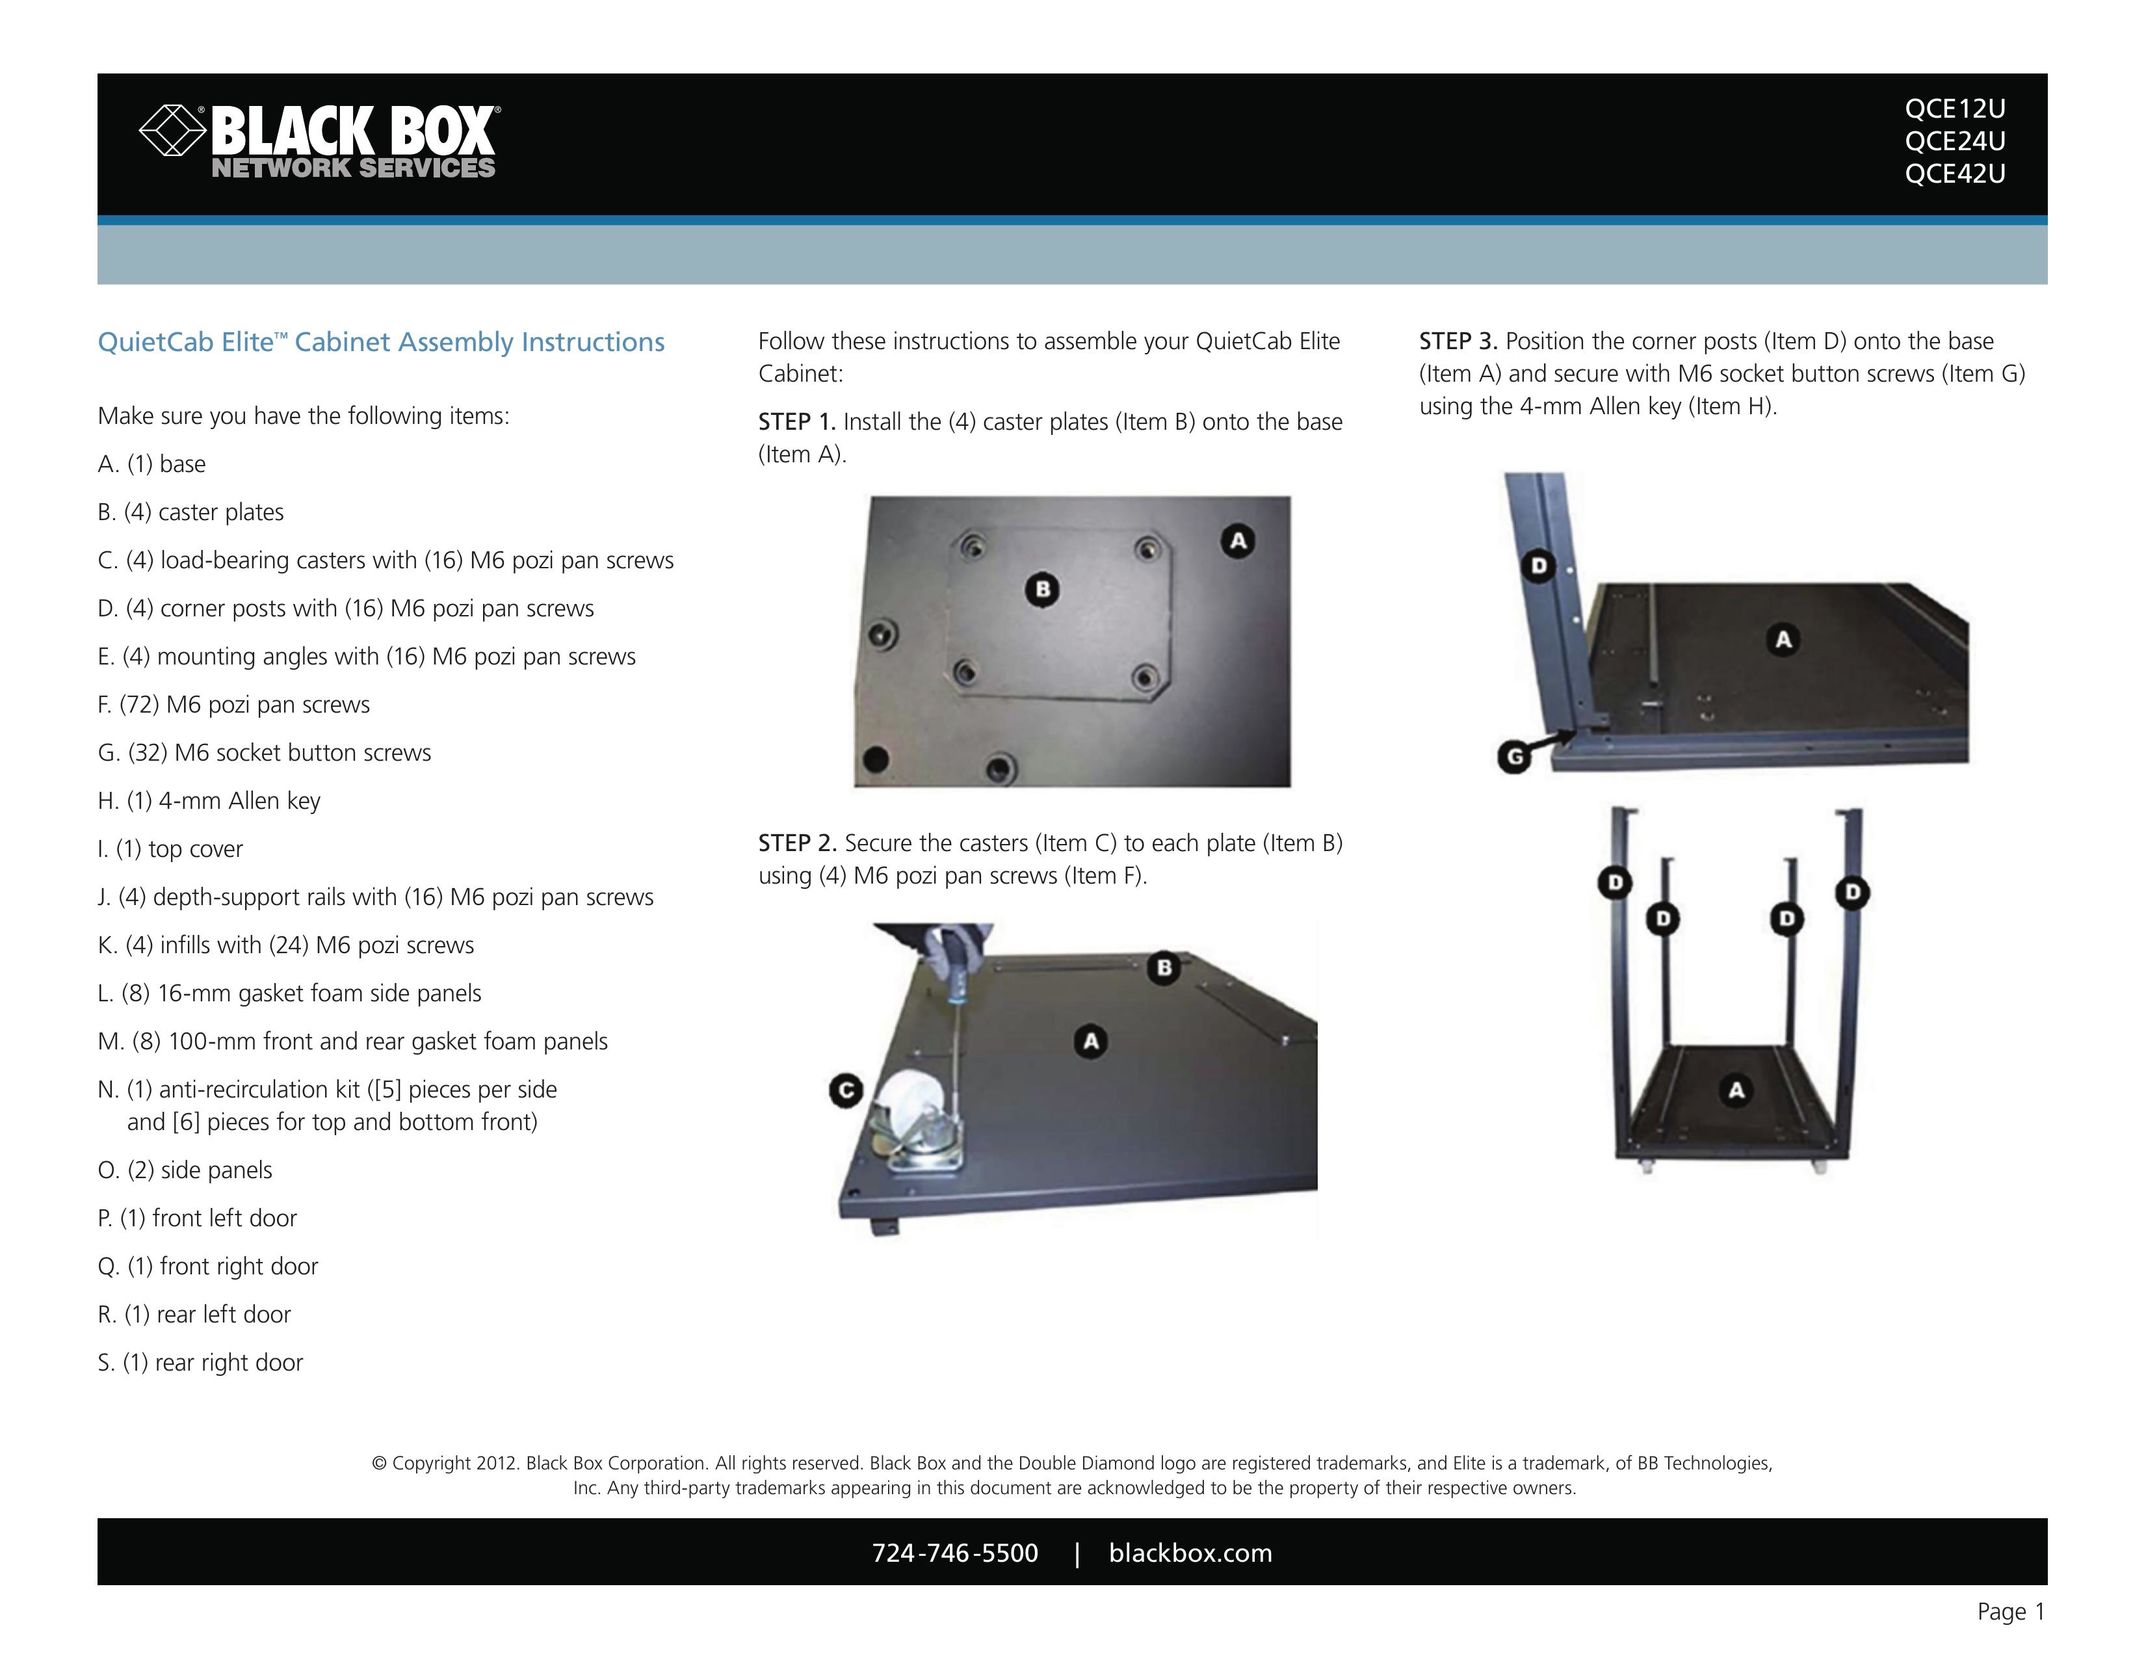 Black Box QCE24U Cable Box User Manual